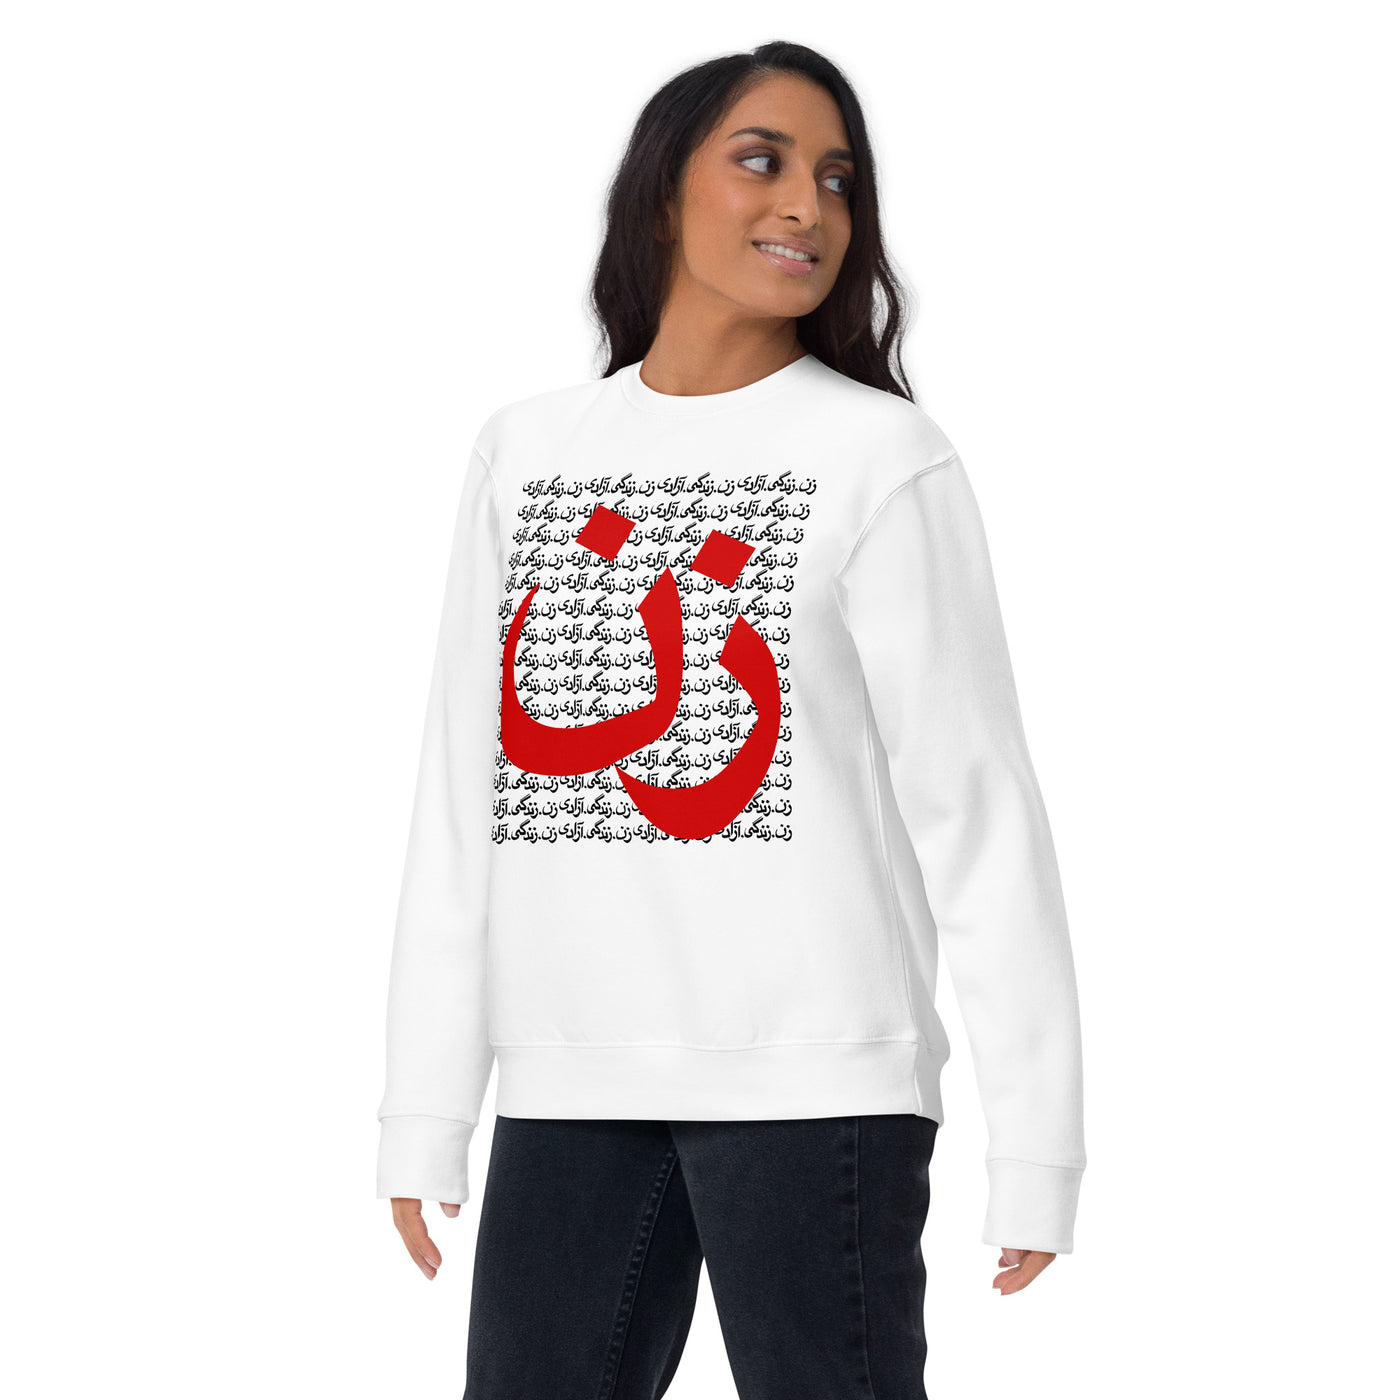 Unisex Premium crewneck Sweatshirt with Zan, zendegi, azadi (woman, life, freedom) imprint